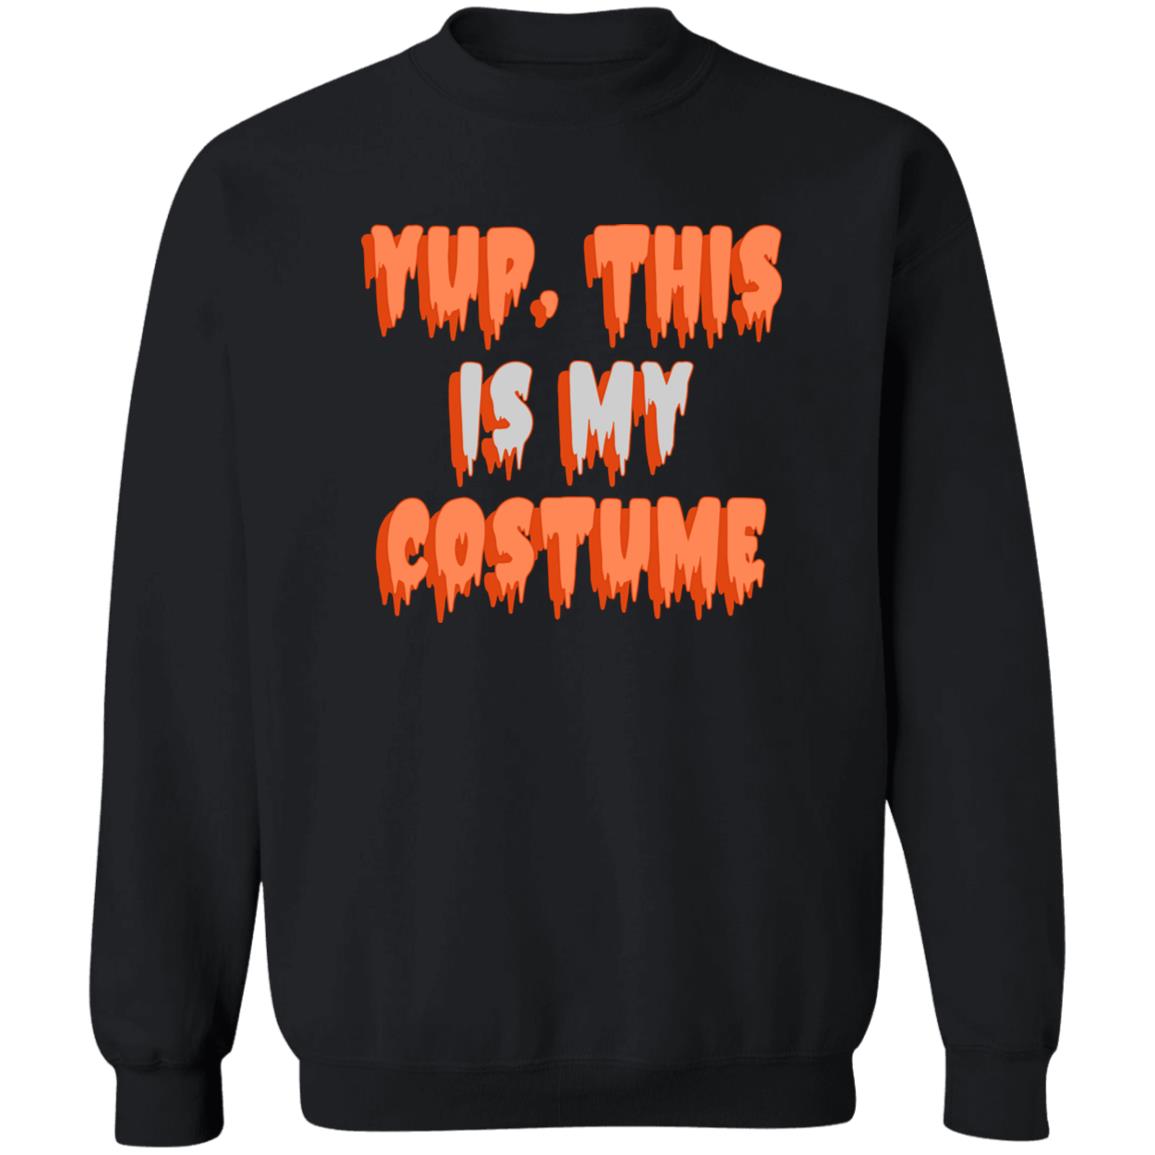 Yup, This is My Costume Sweatshirt